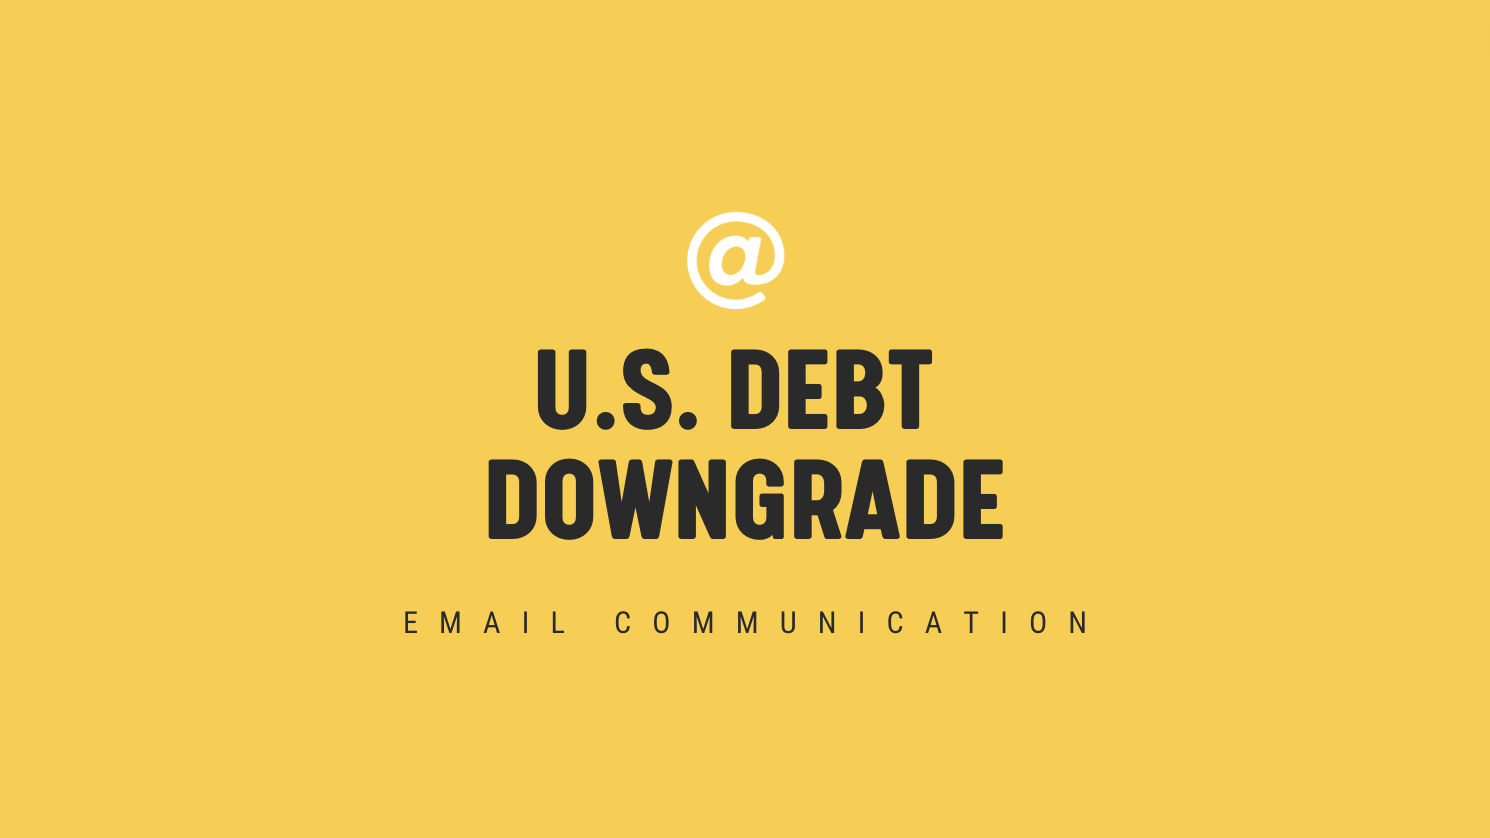 [NEW] U.S. Debt Downgrade - Single Topic Email